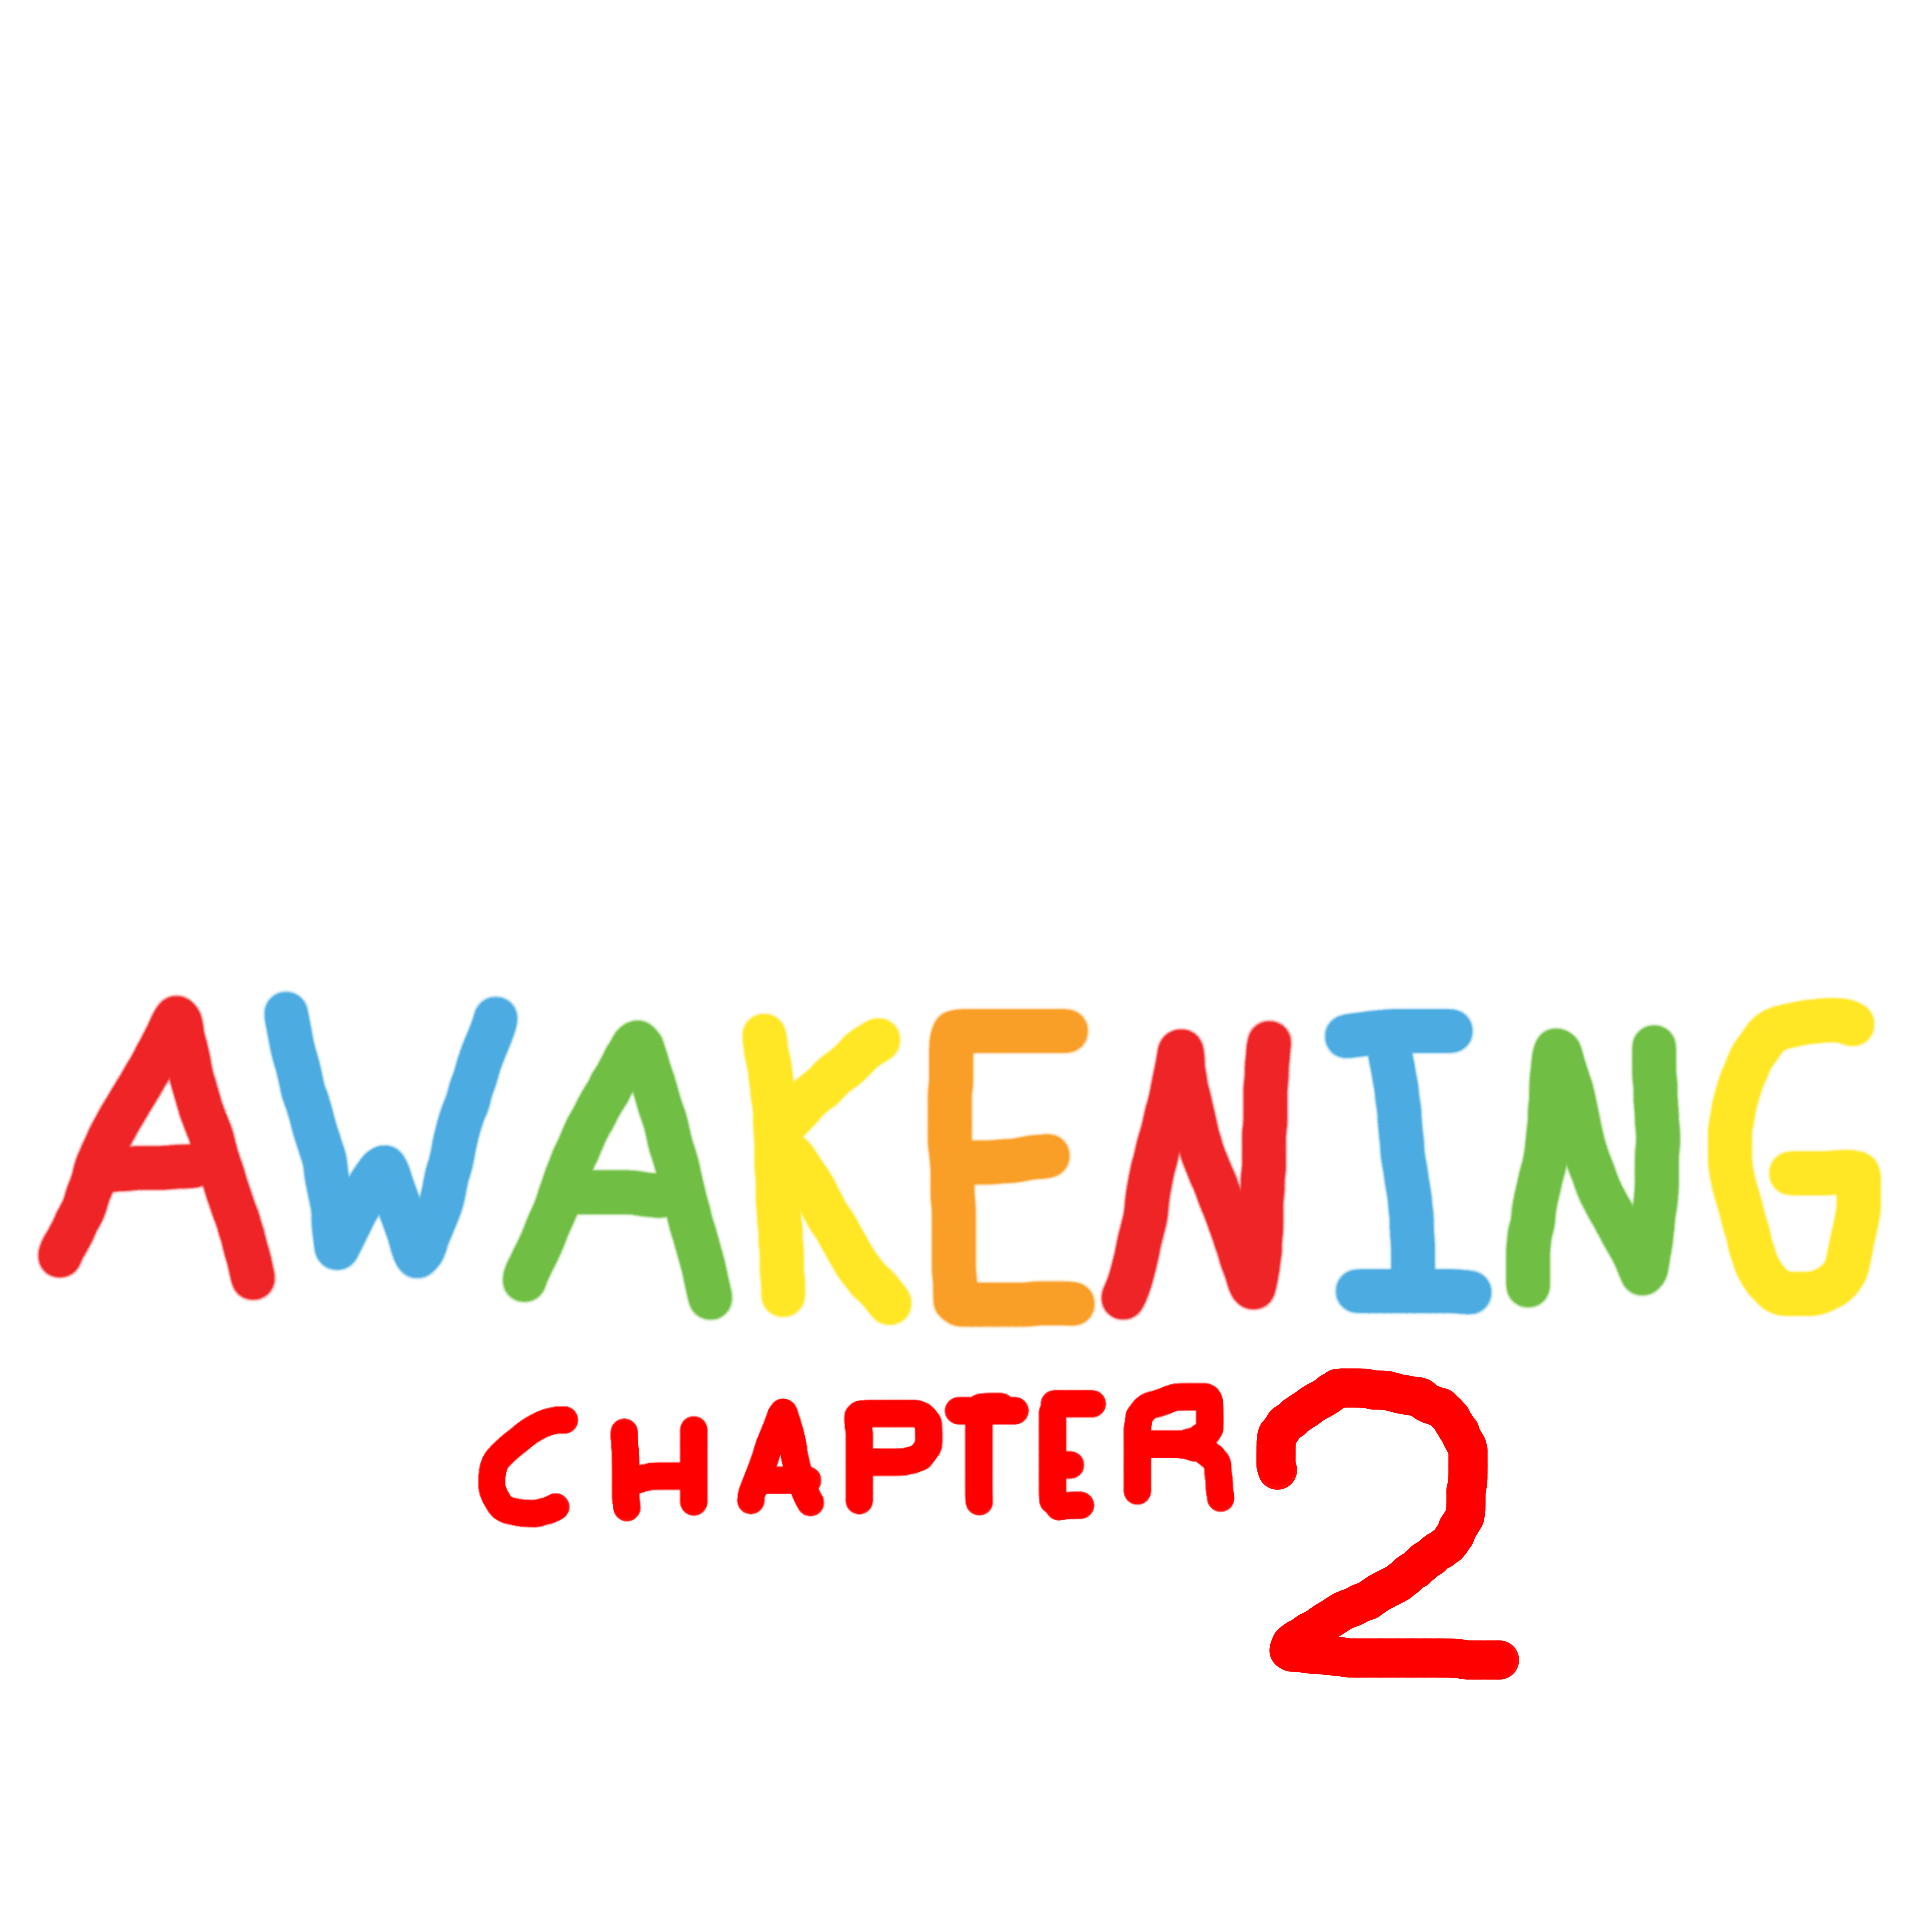 Chompa's Awakening Chapter 2 [FAN-MADE]